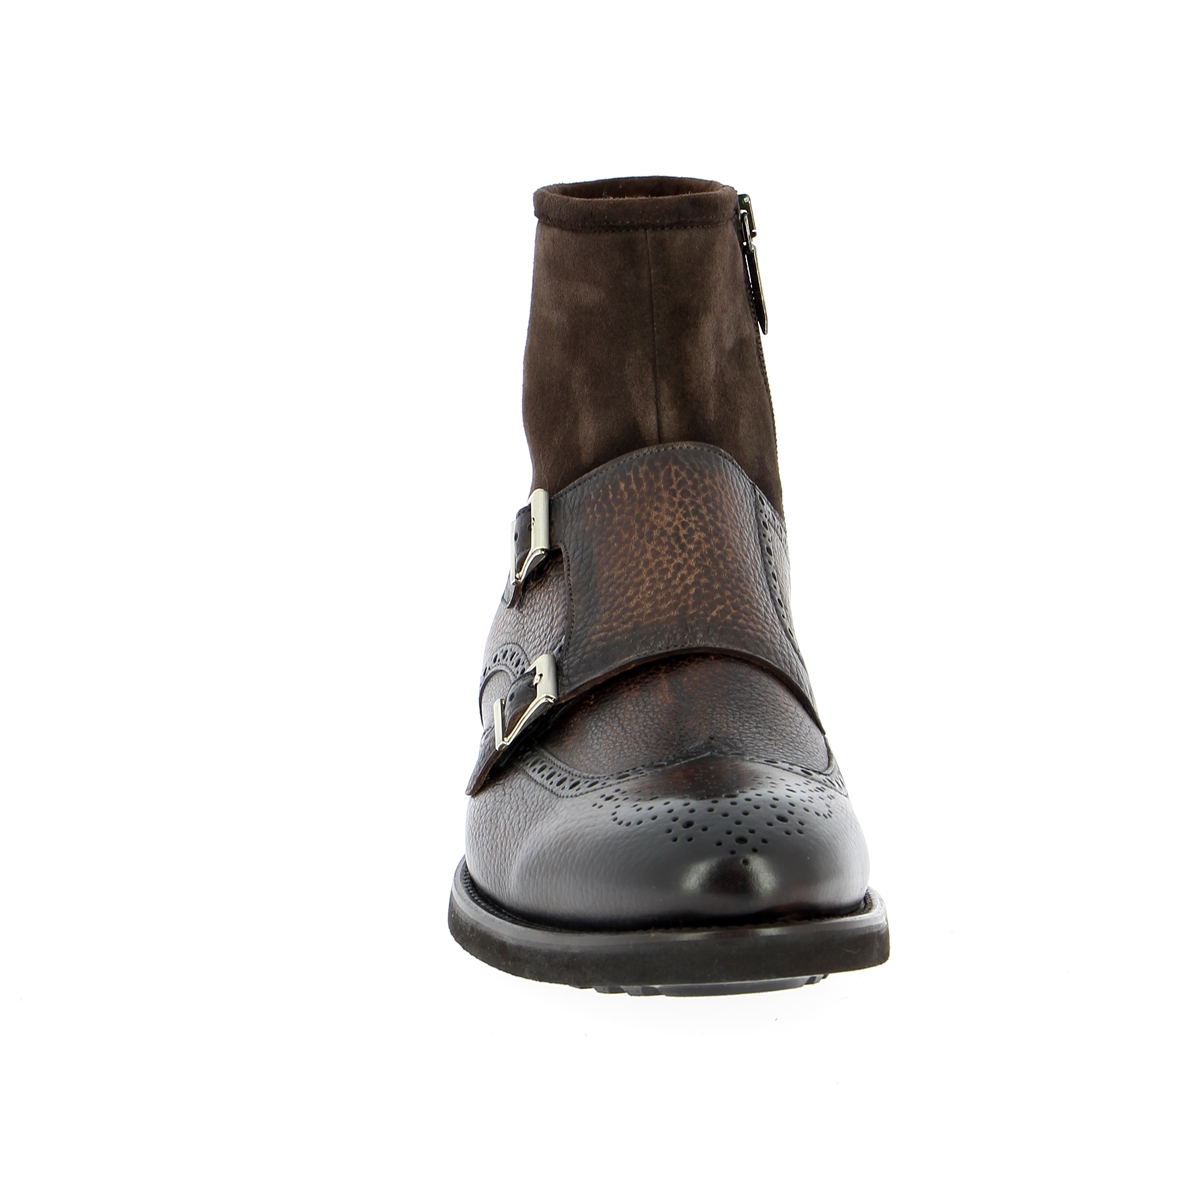 Magnanni Boots marron